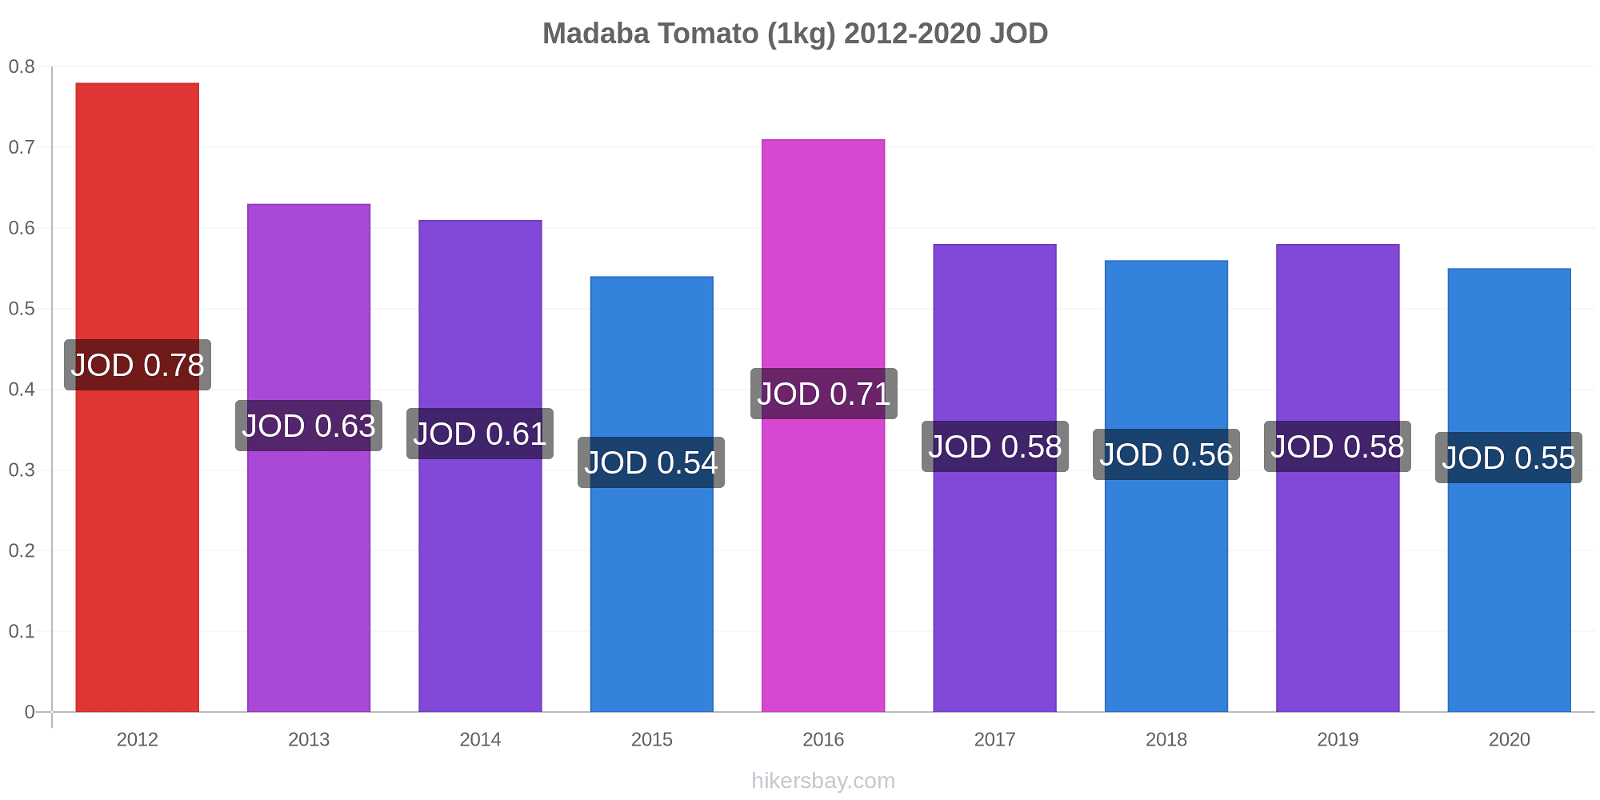 Madaba price changes Tomato (1kg) hikersbay.com